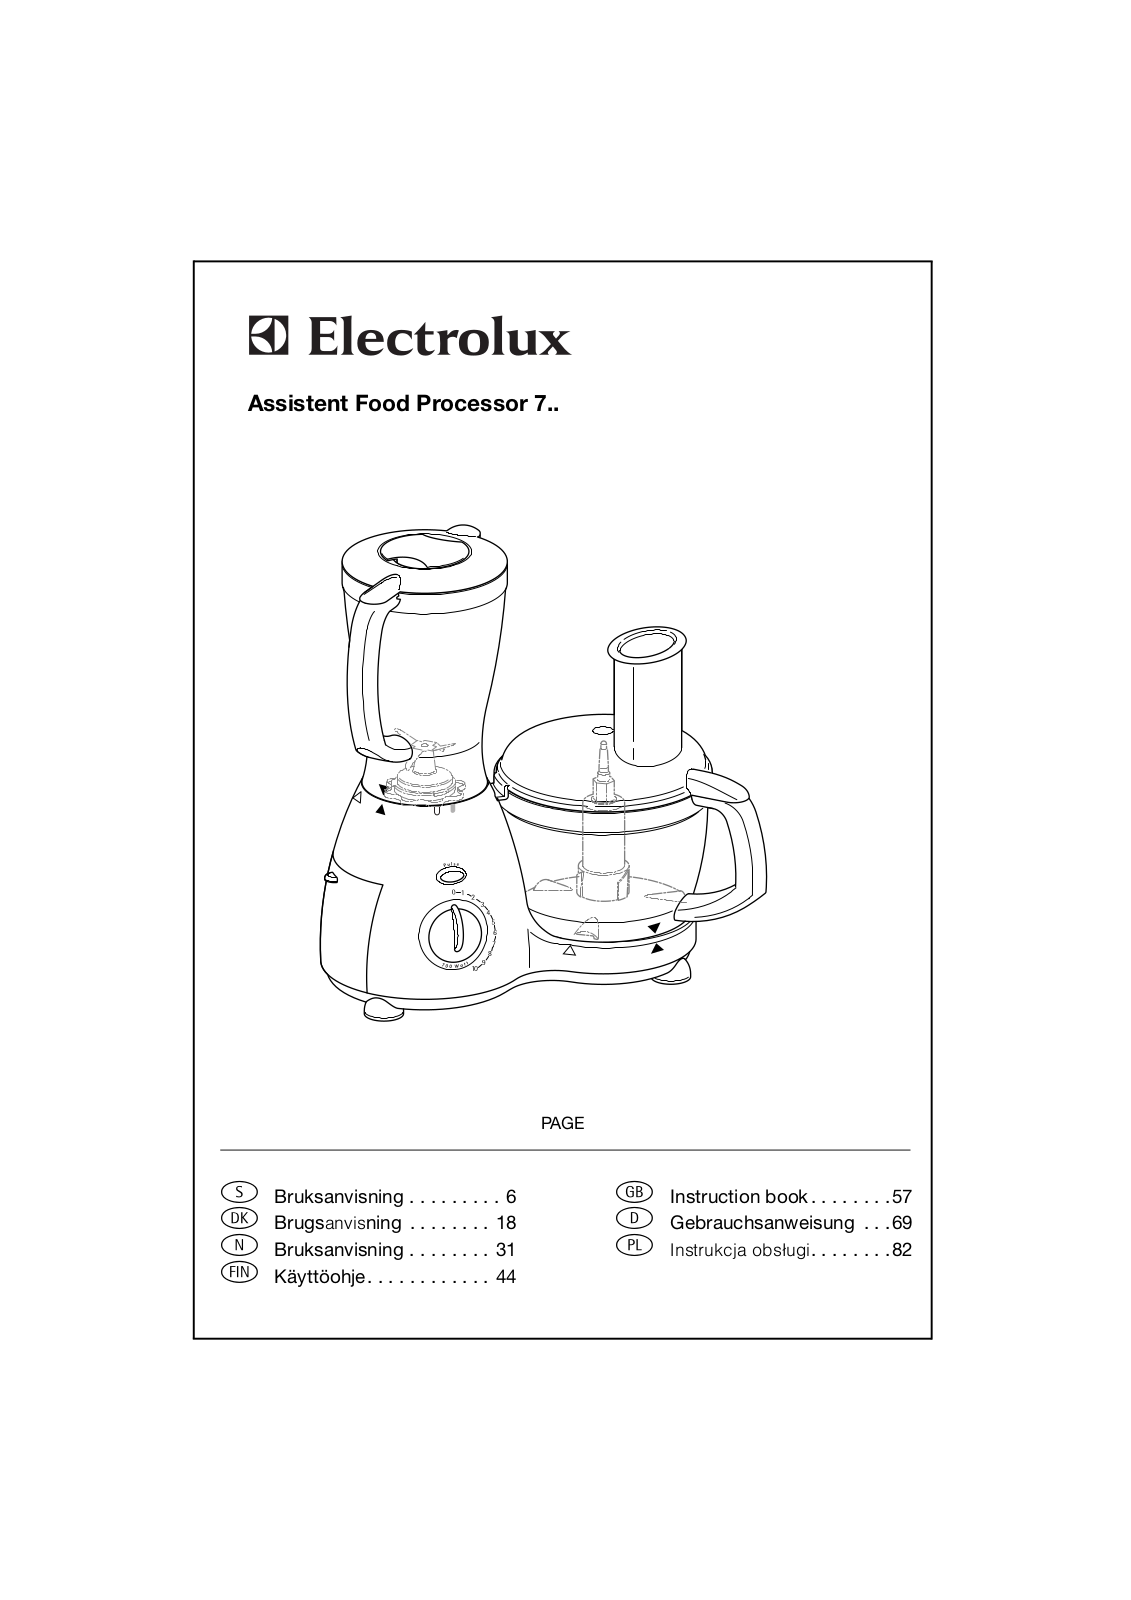 Aeg-electrolux ASSISTENT FOOD PROCESSOR 7, AFP750 Manual